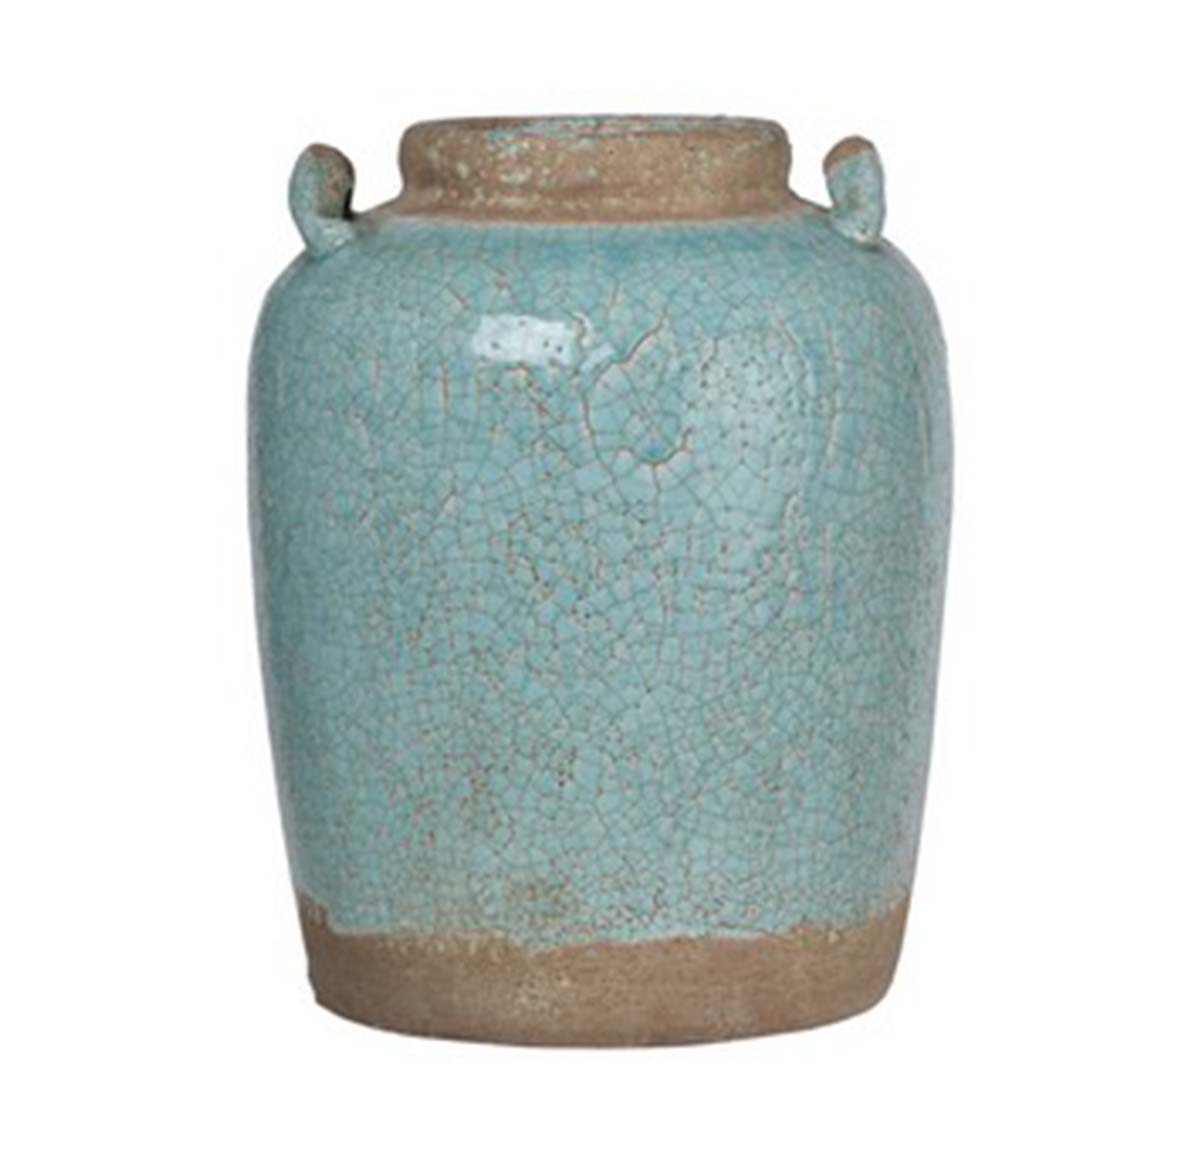 The Candia Ceramic Vase Large - Turquoise | Vases | Home Decor